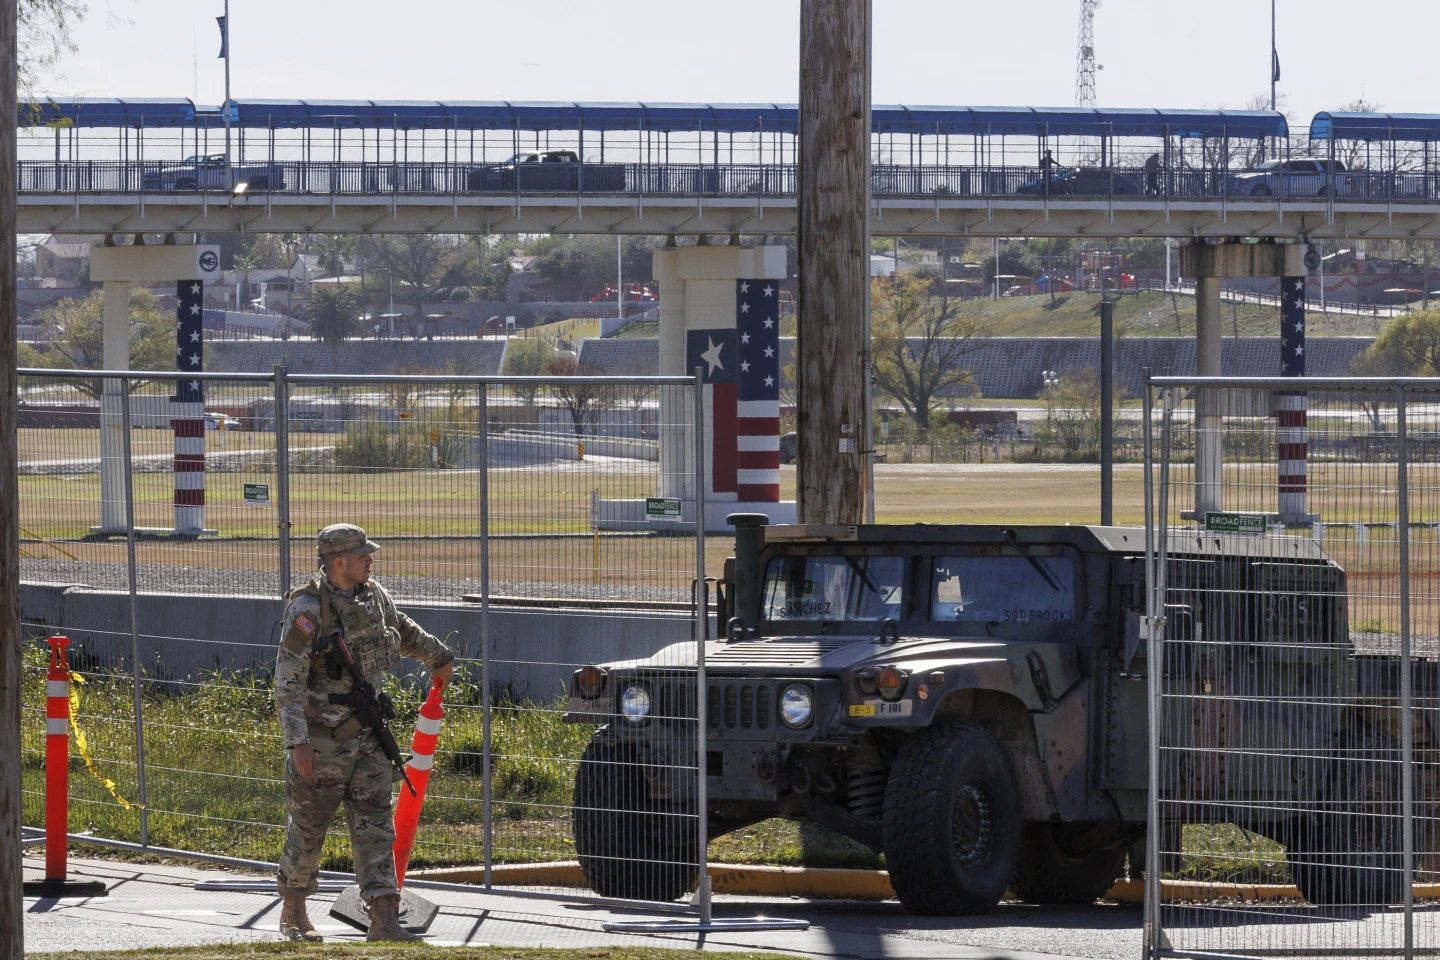 Migrant deaths in Rio Grande intensify tensions between Texas, Biden administration over crossings